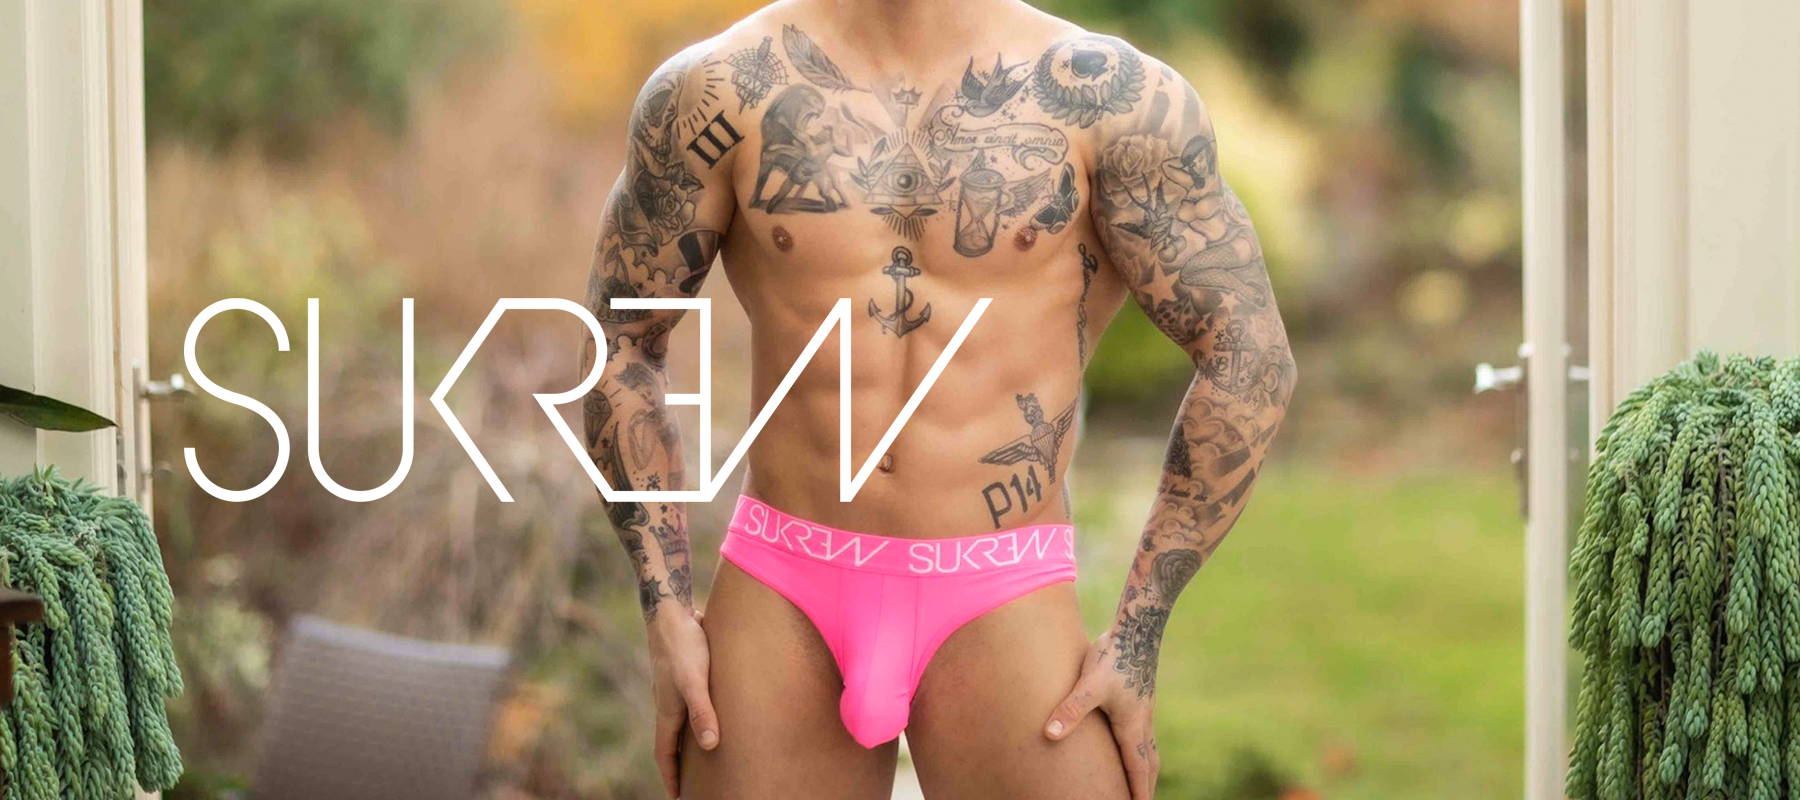 Sukrew Stirling V Brief men's underwear jock slip enhance backless male bikini 